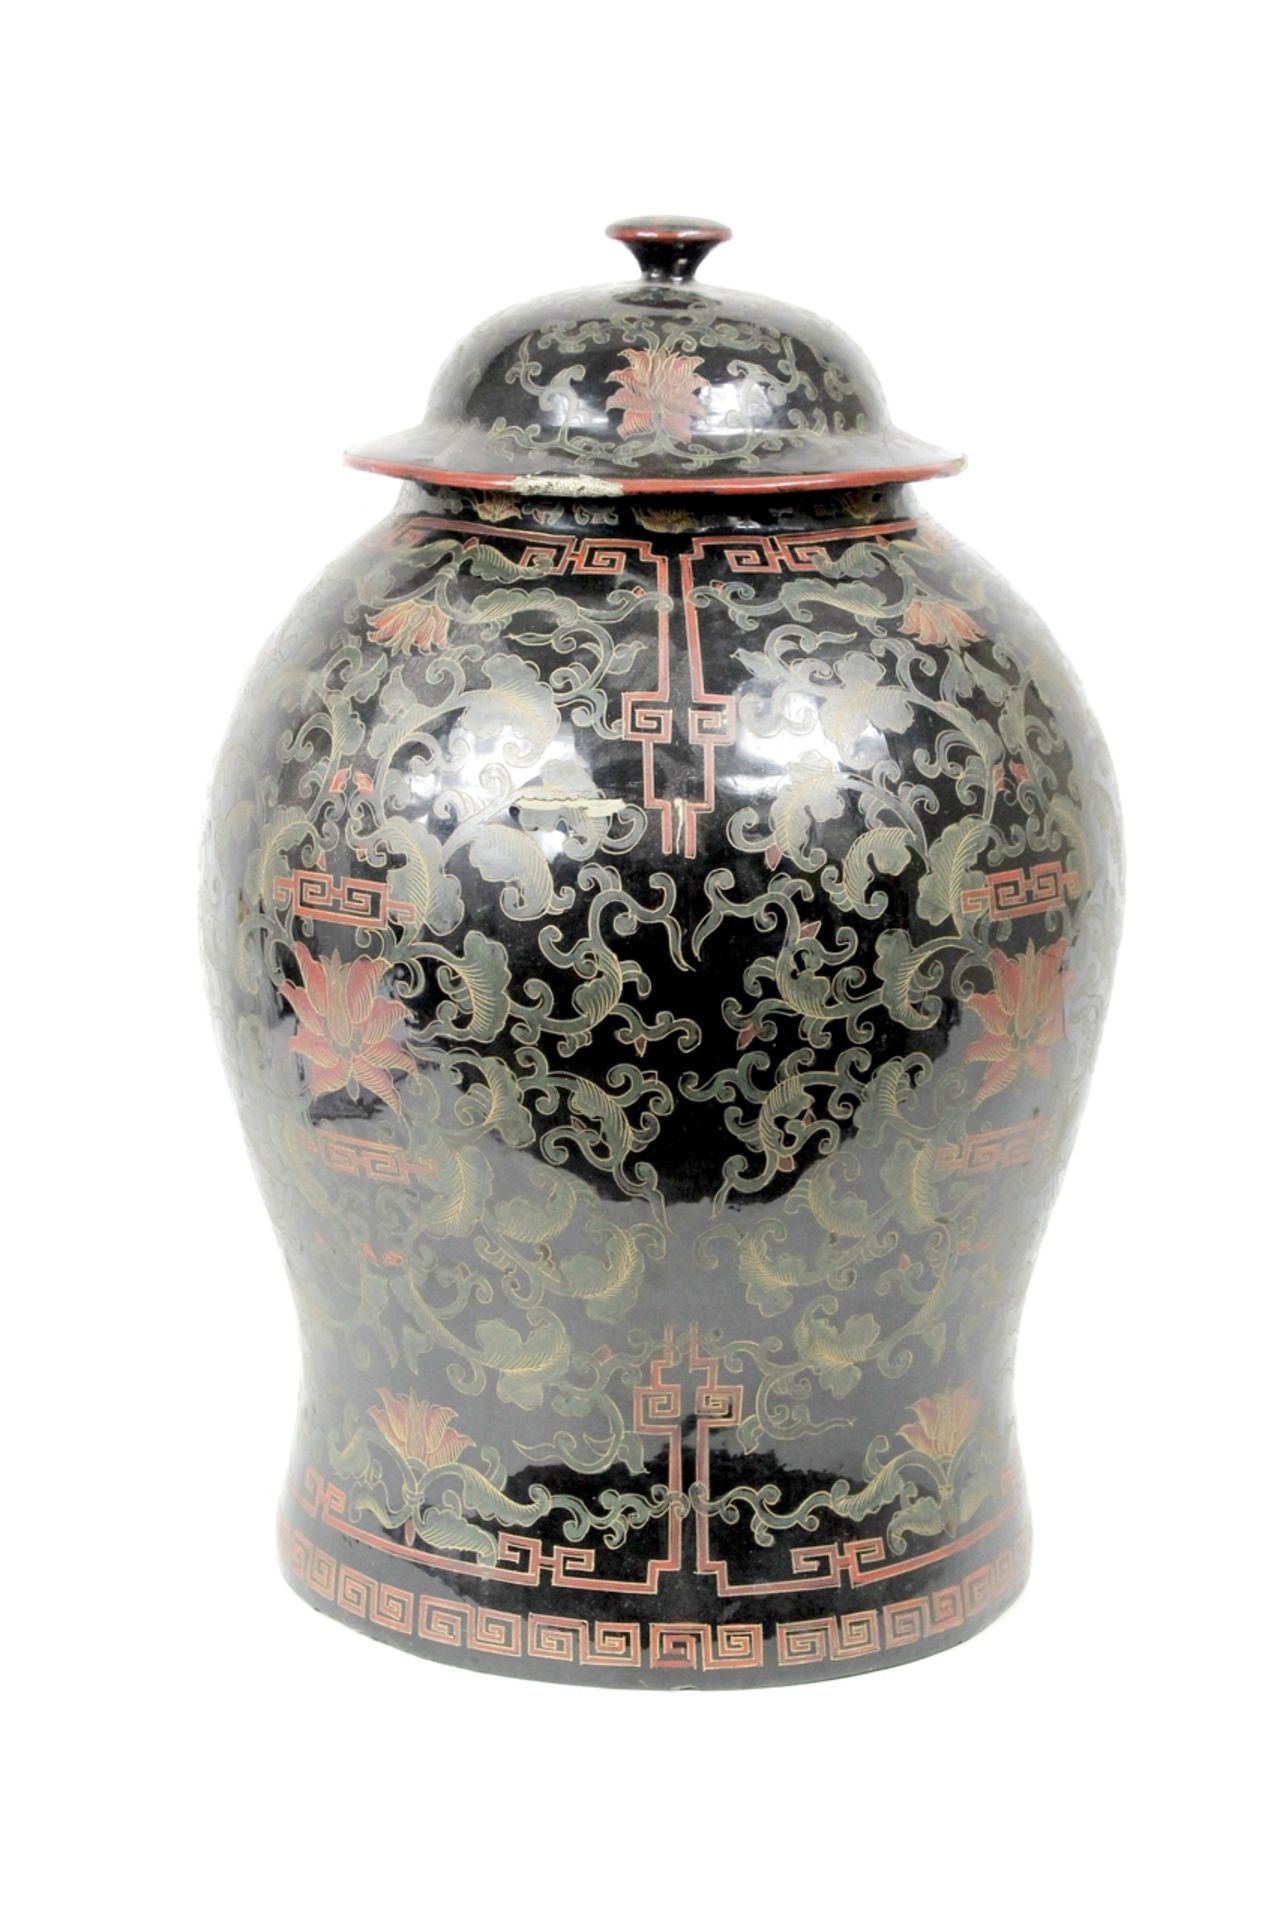 Schwarzlack Mei Ping Vase , Kangxi Dynastie - Image 2 of 8